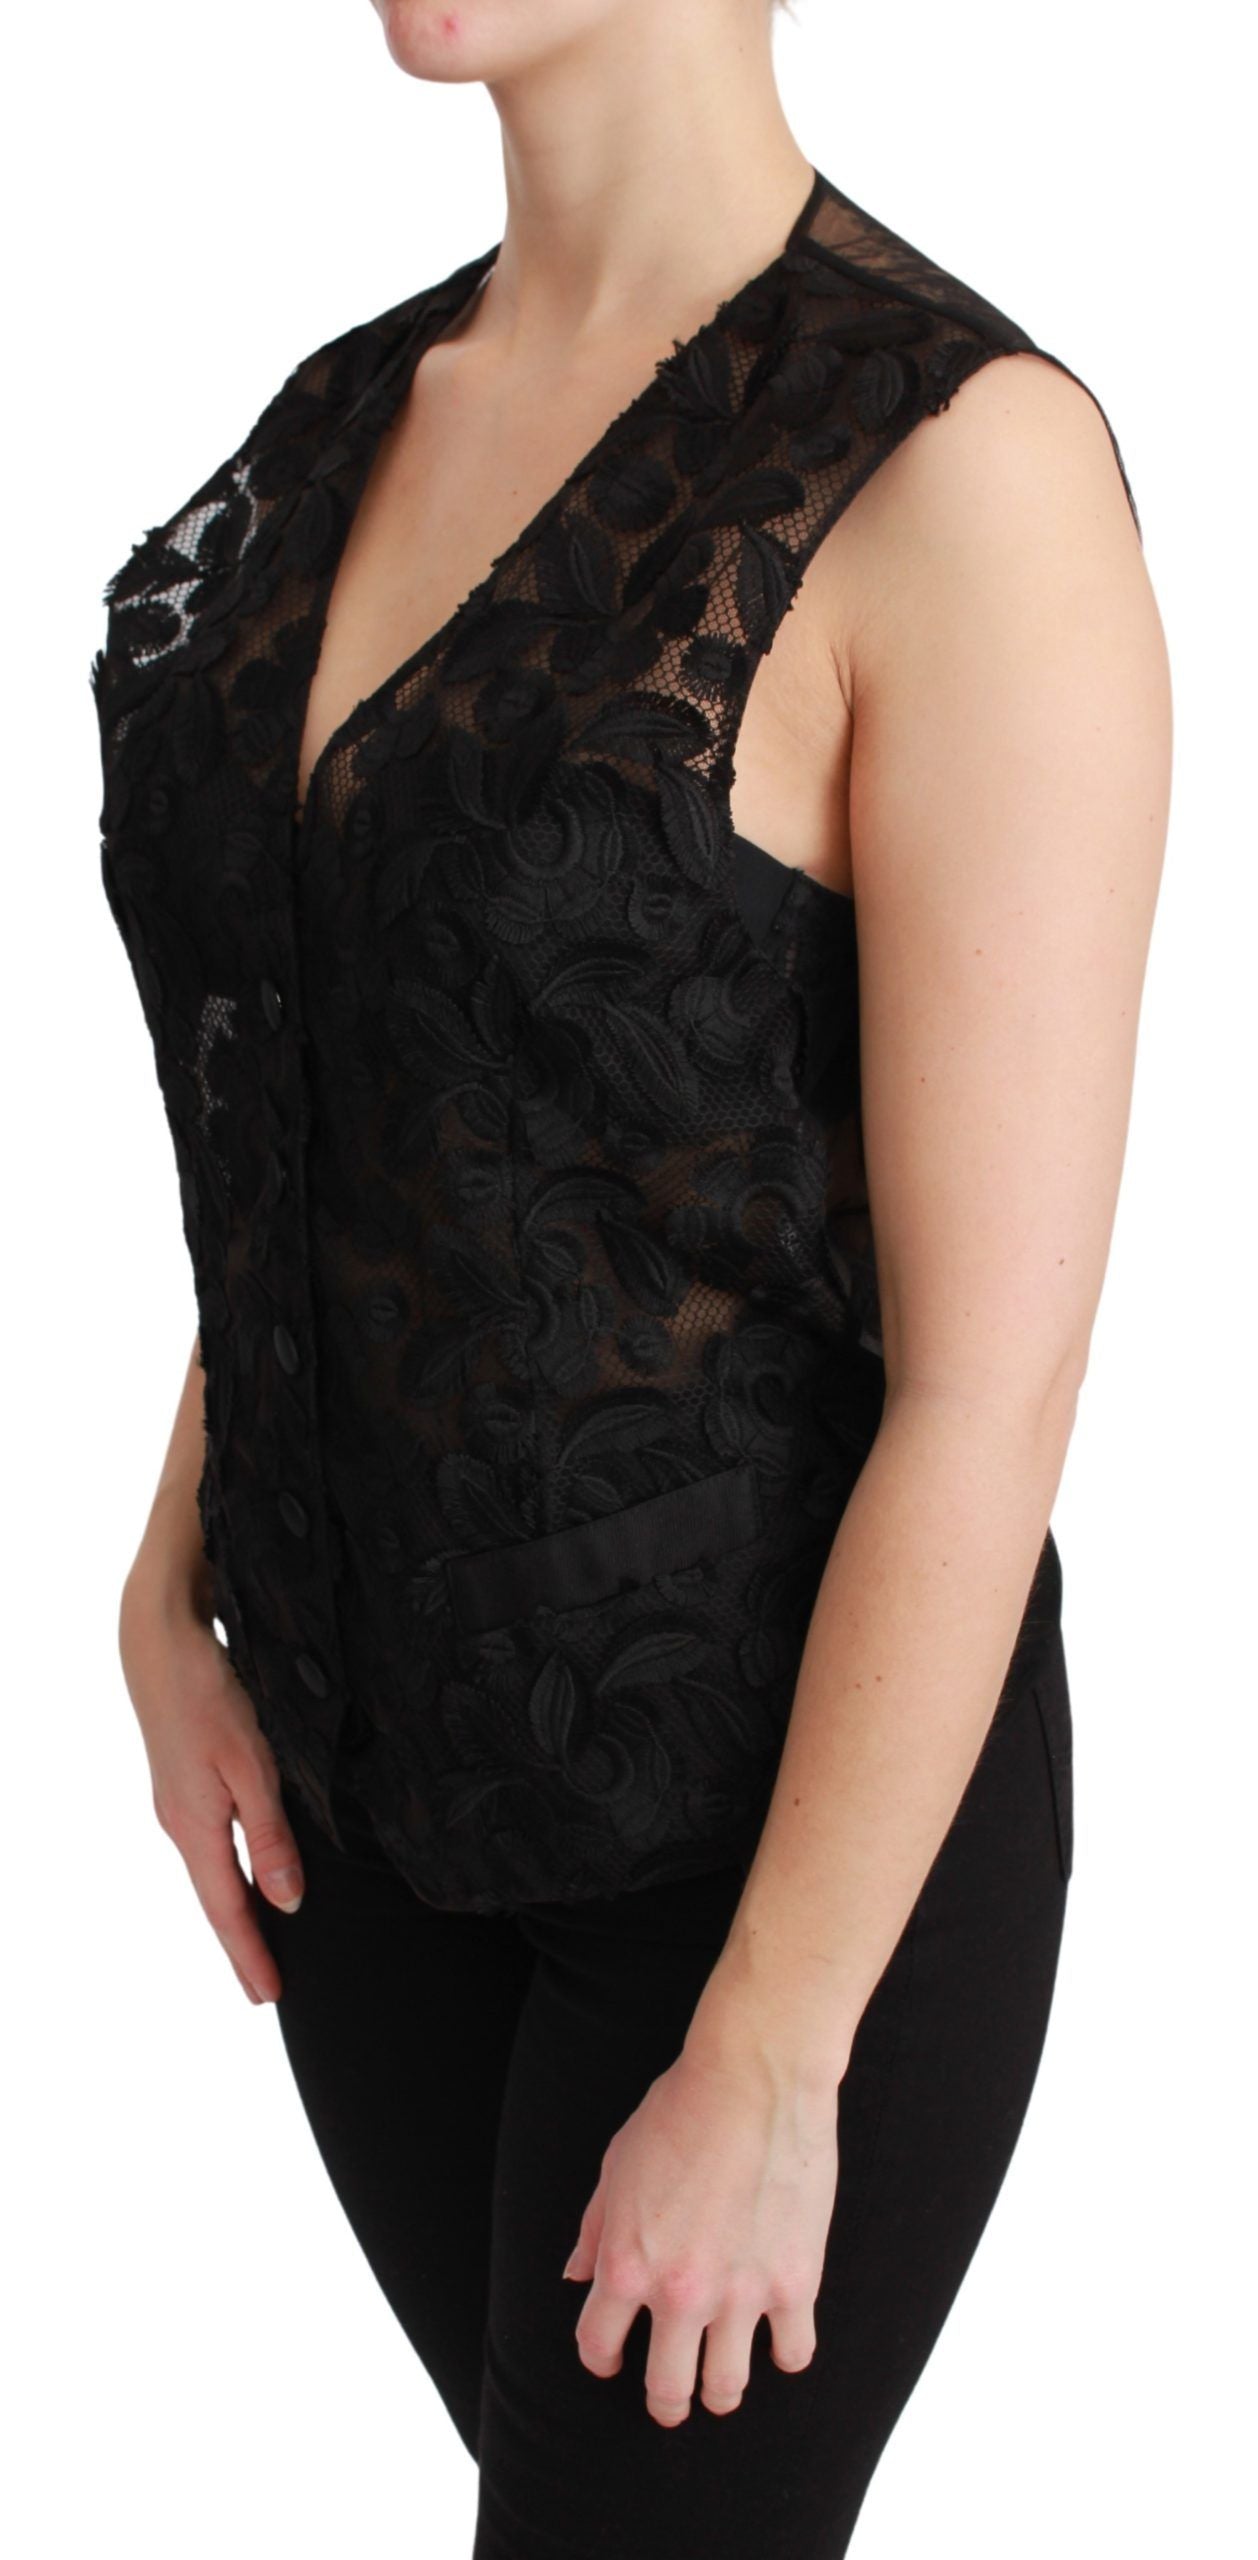 Dolce & Gabbana Black Floral Brocade Top Gilet Waistcoat